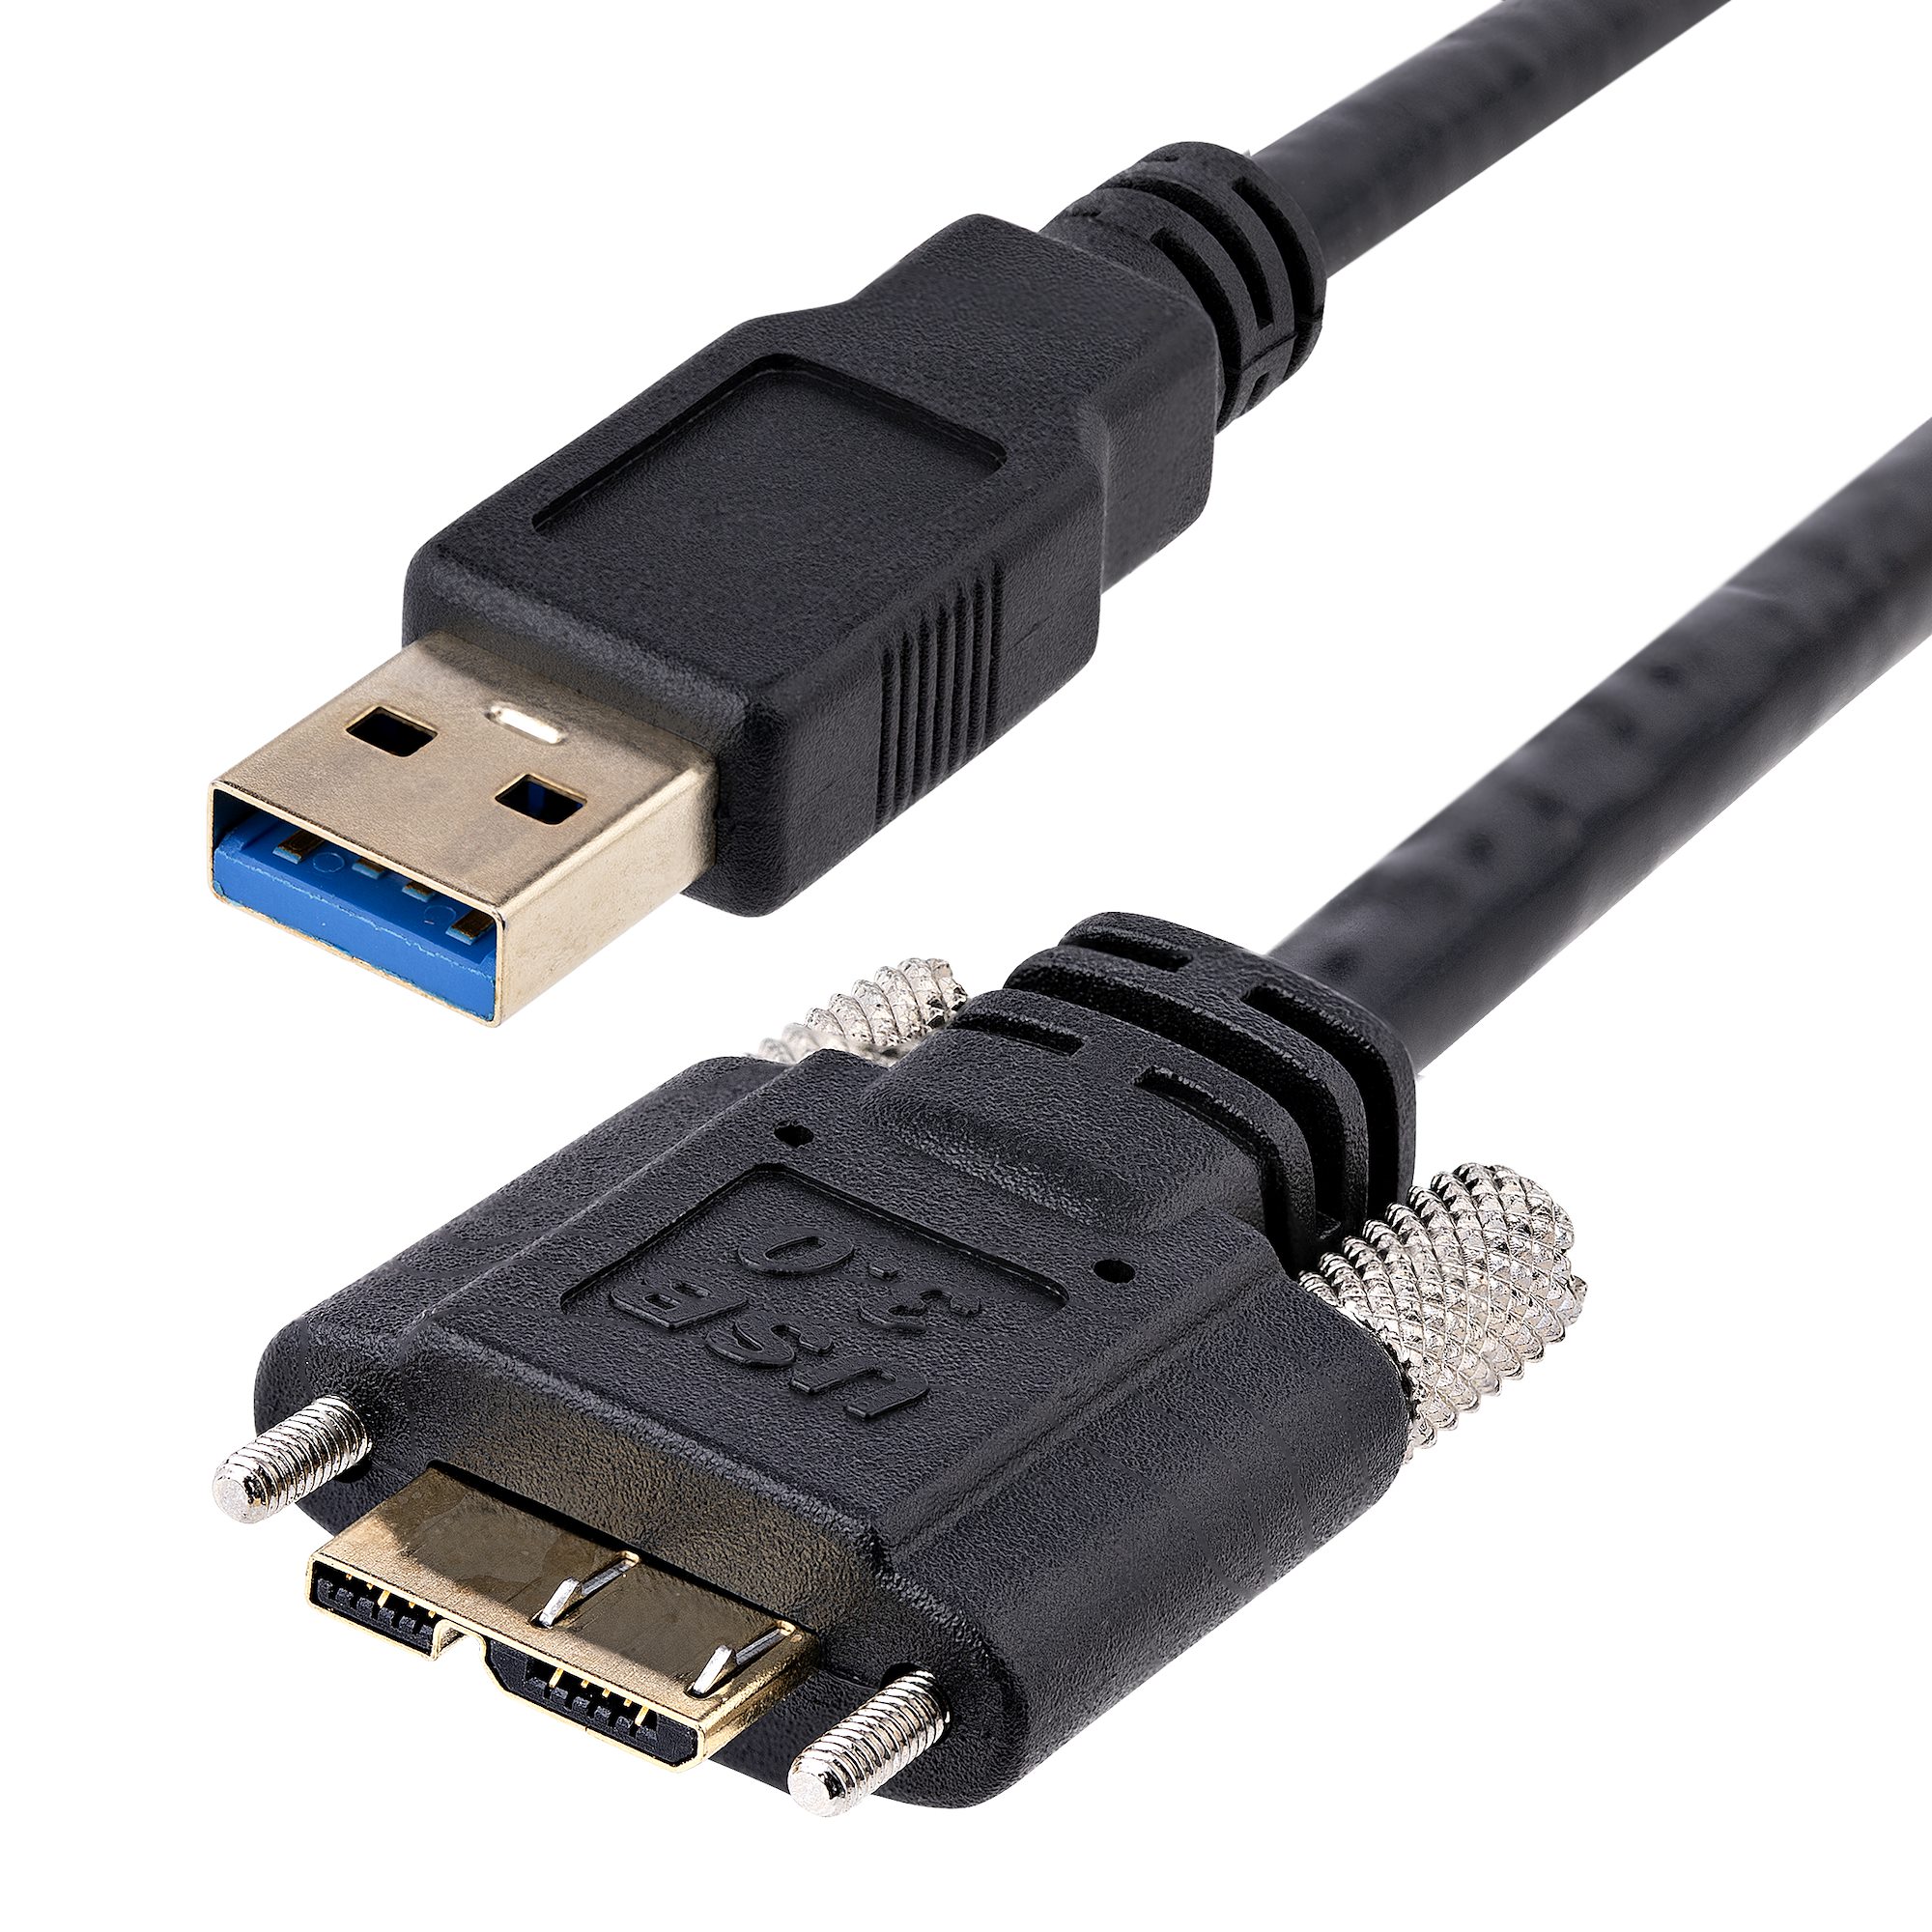 Cable extensor para USB 3.0 - UE350, ATEN Extensores